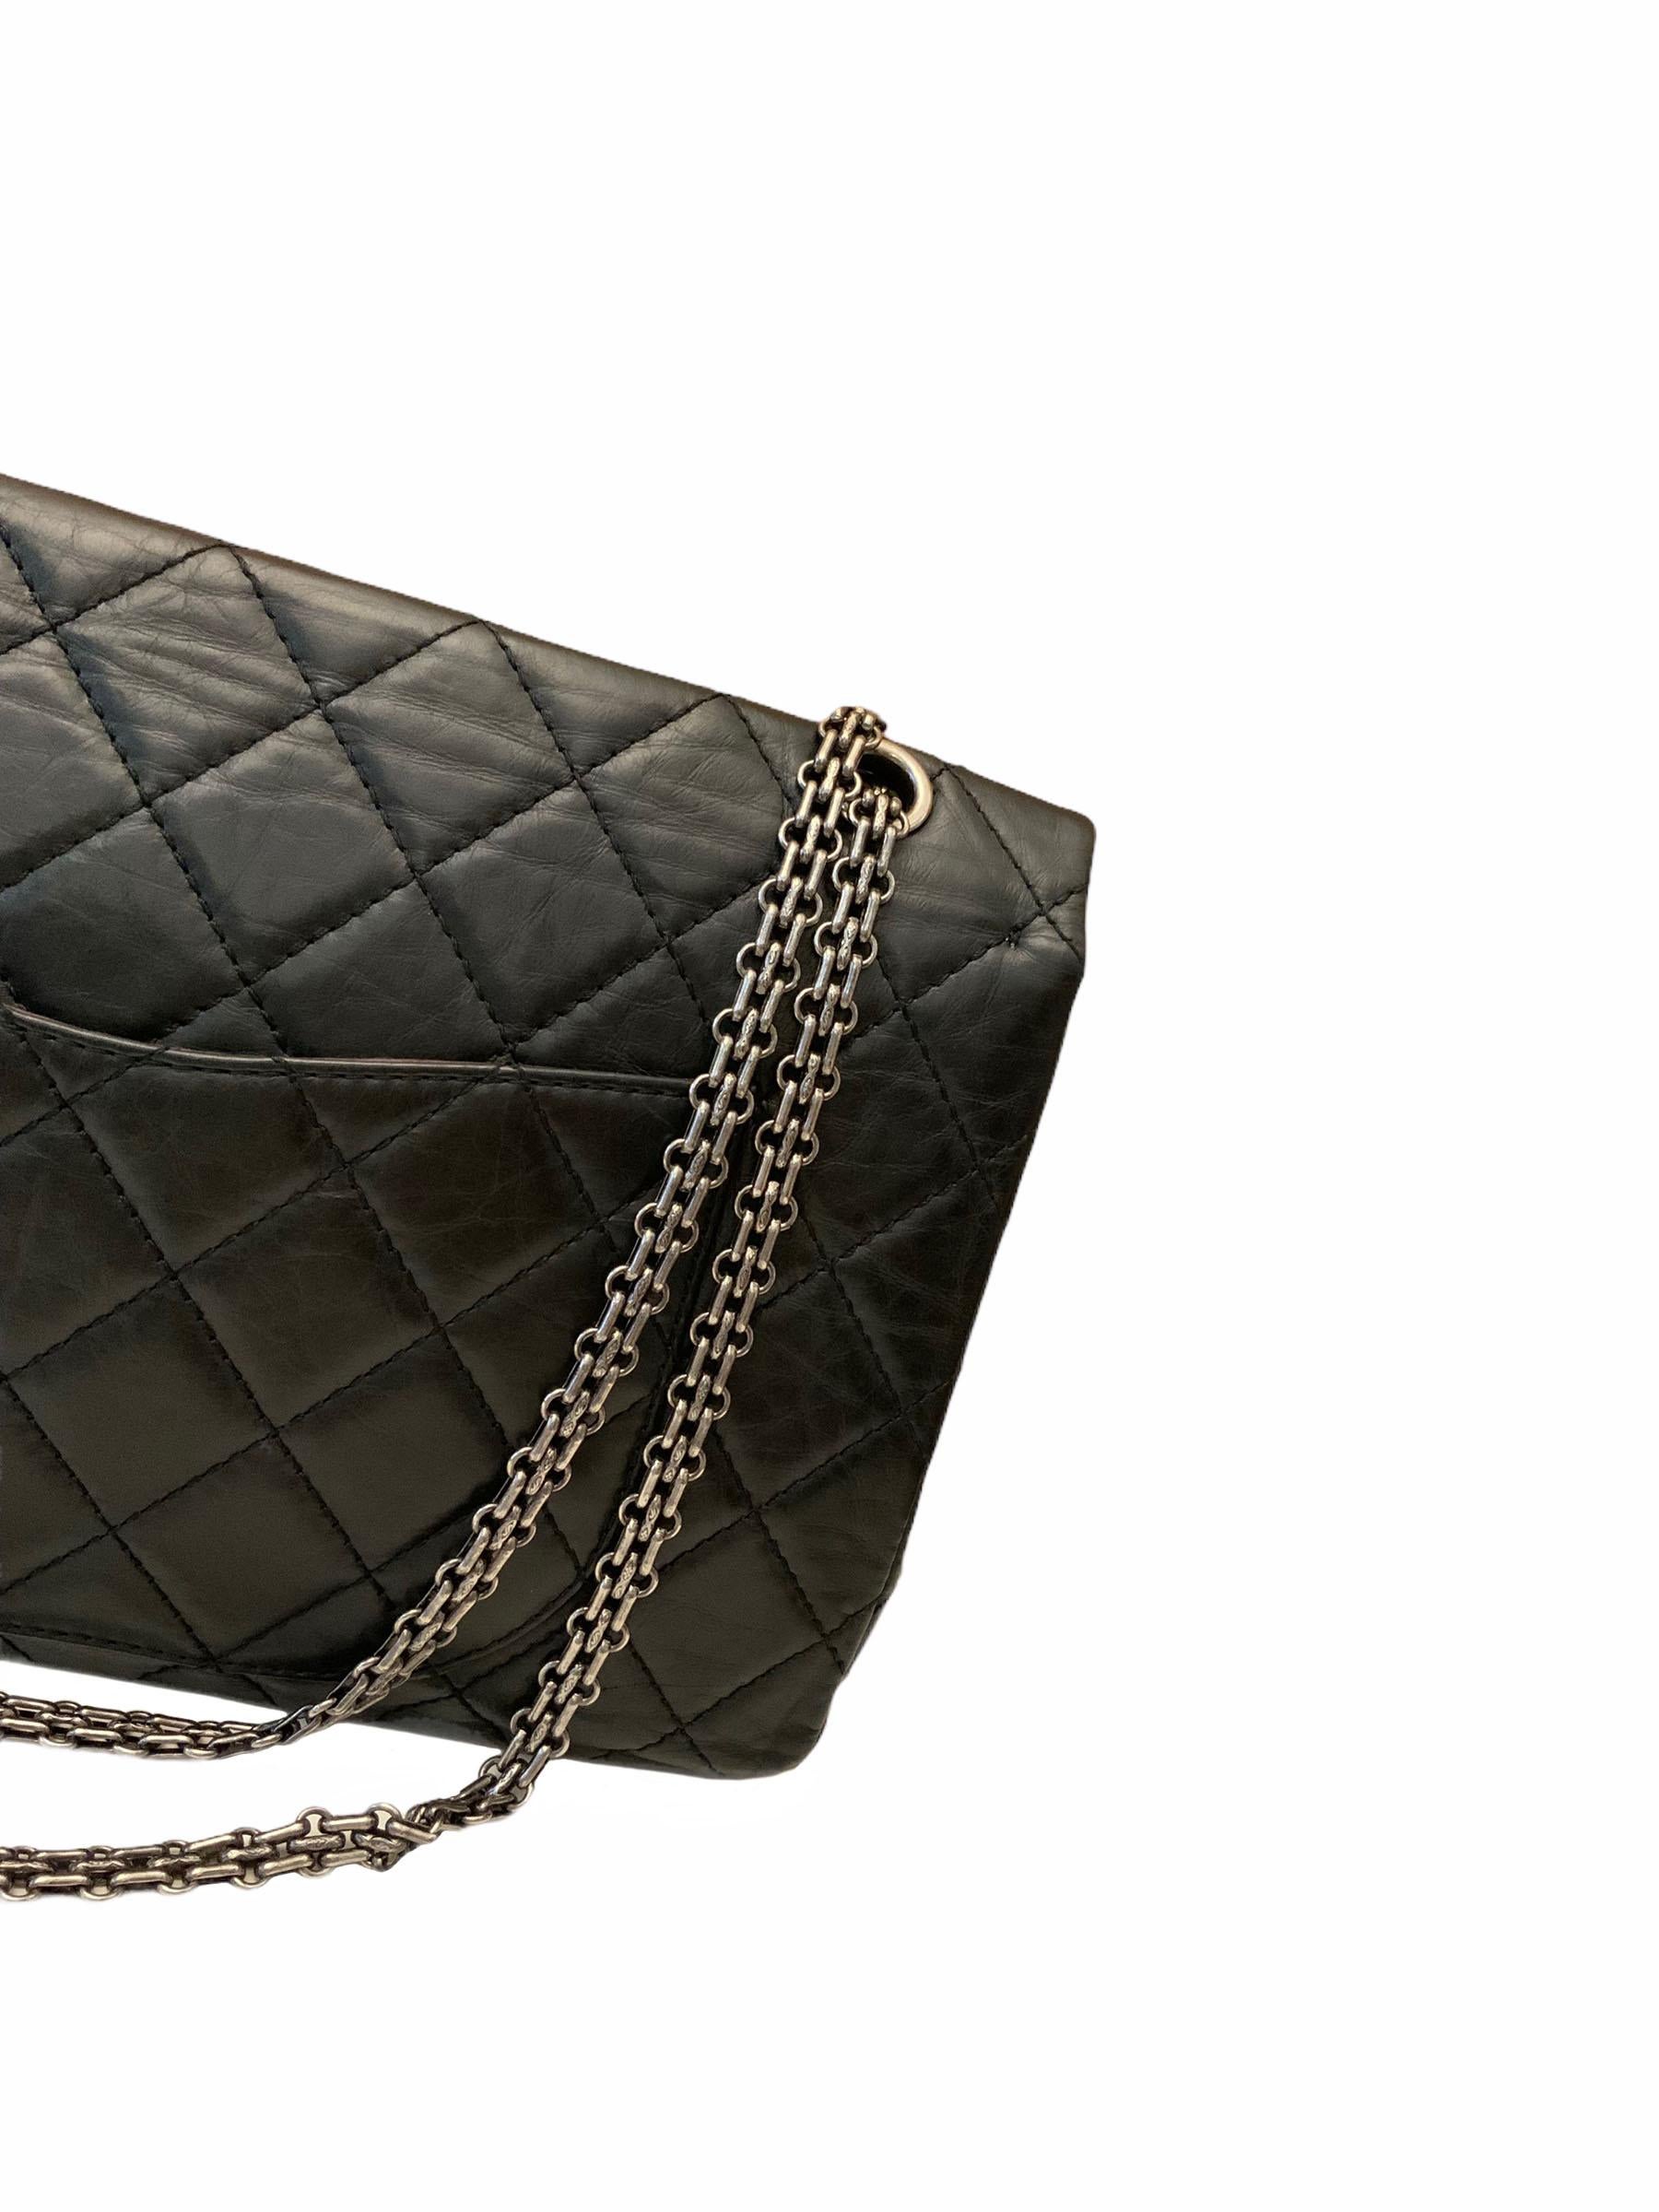 Chanel 2.55 Reissue Black Leather 227 Bag 1